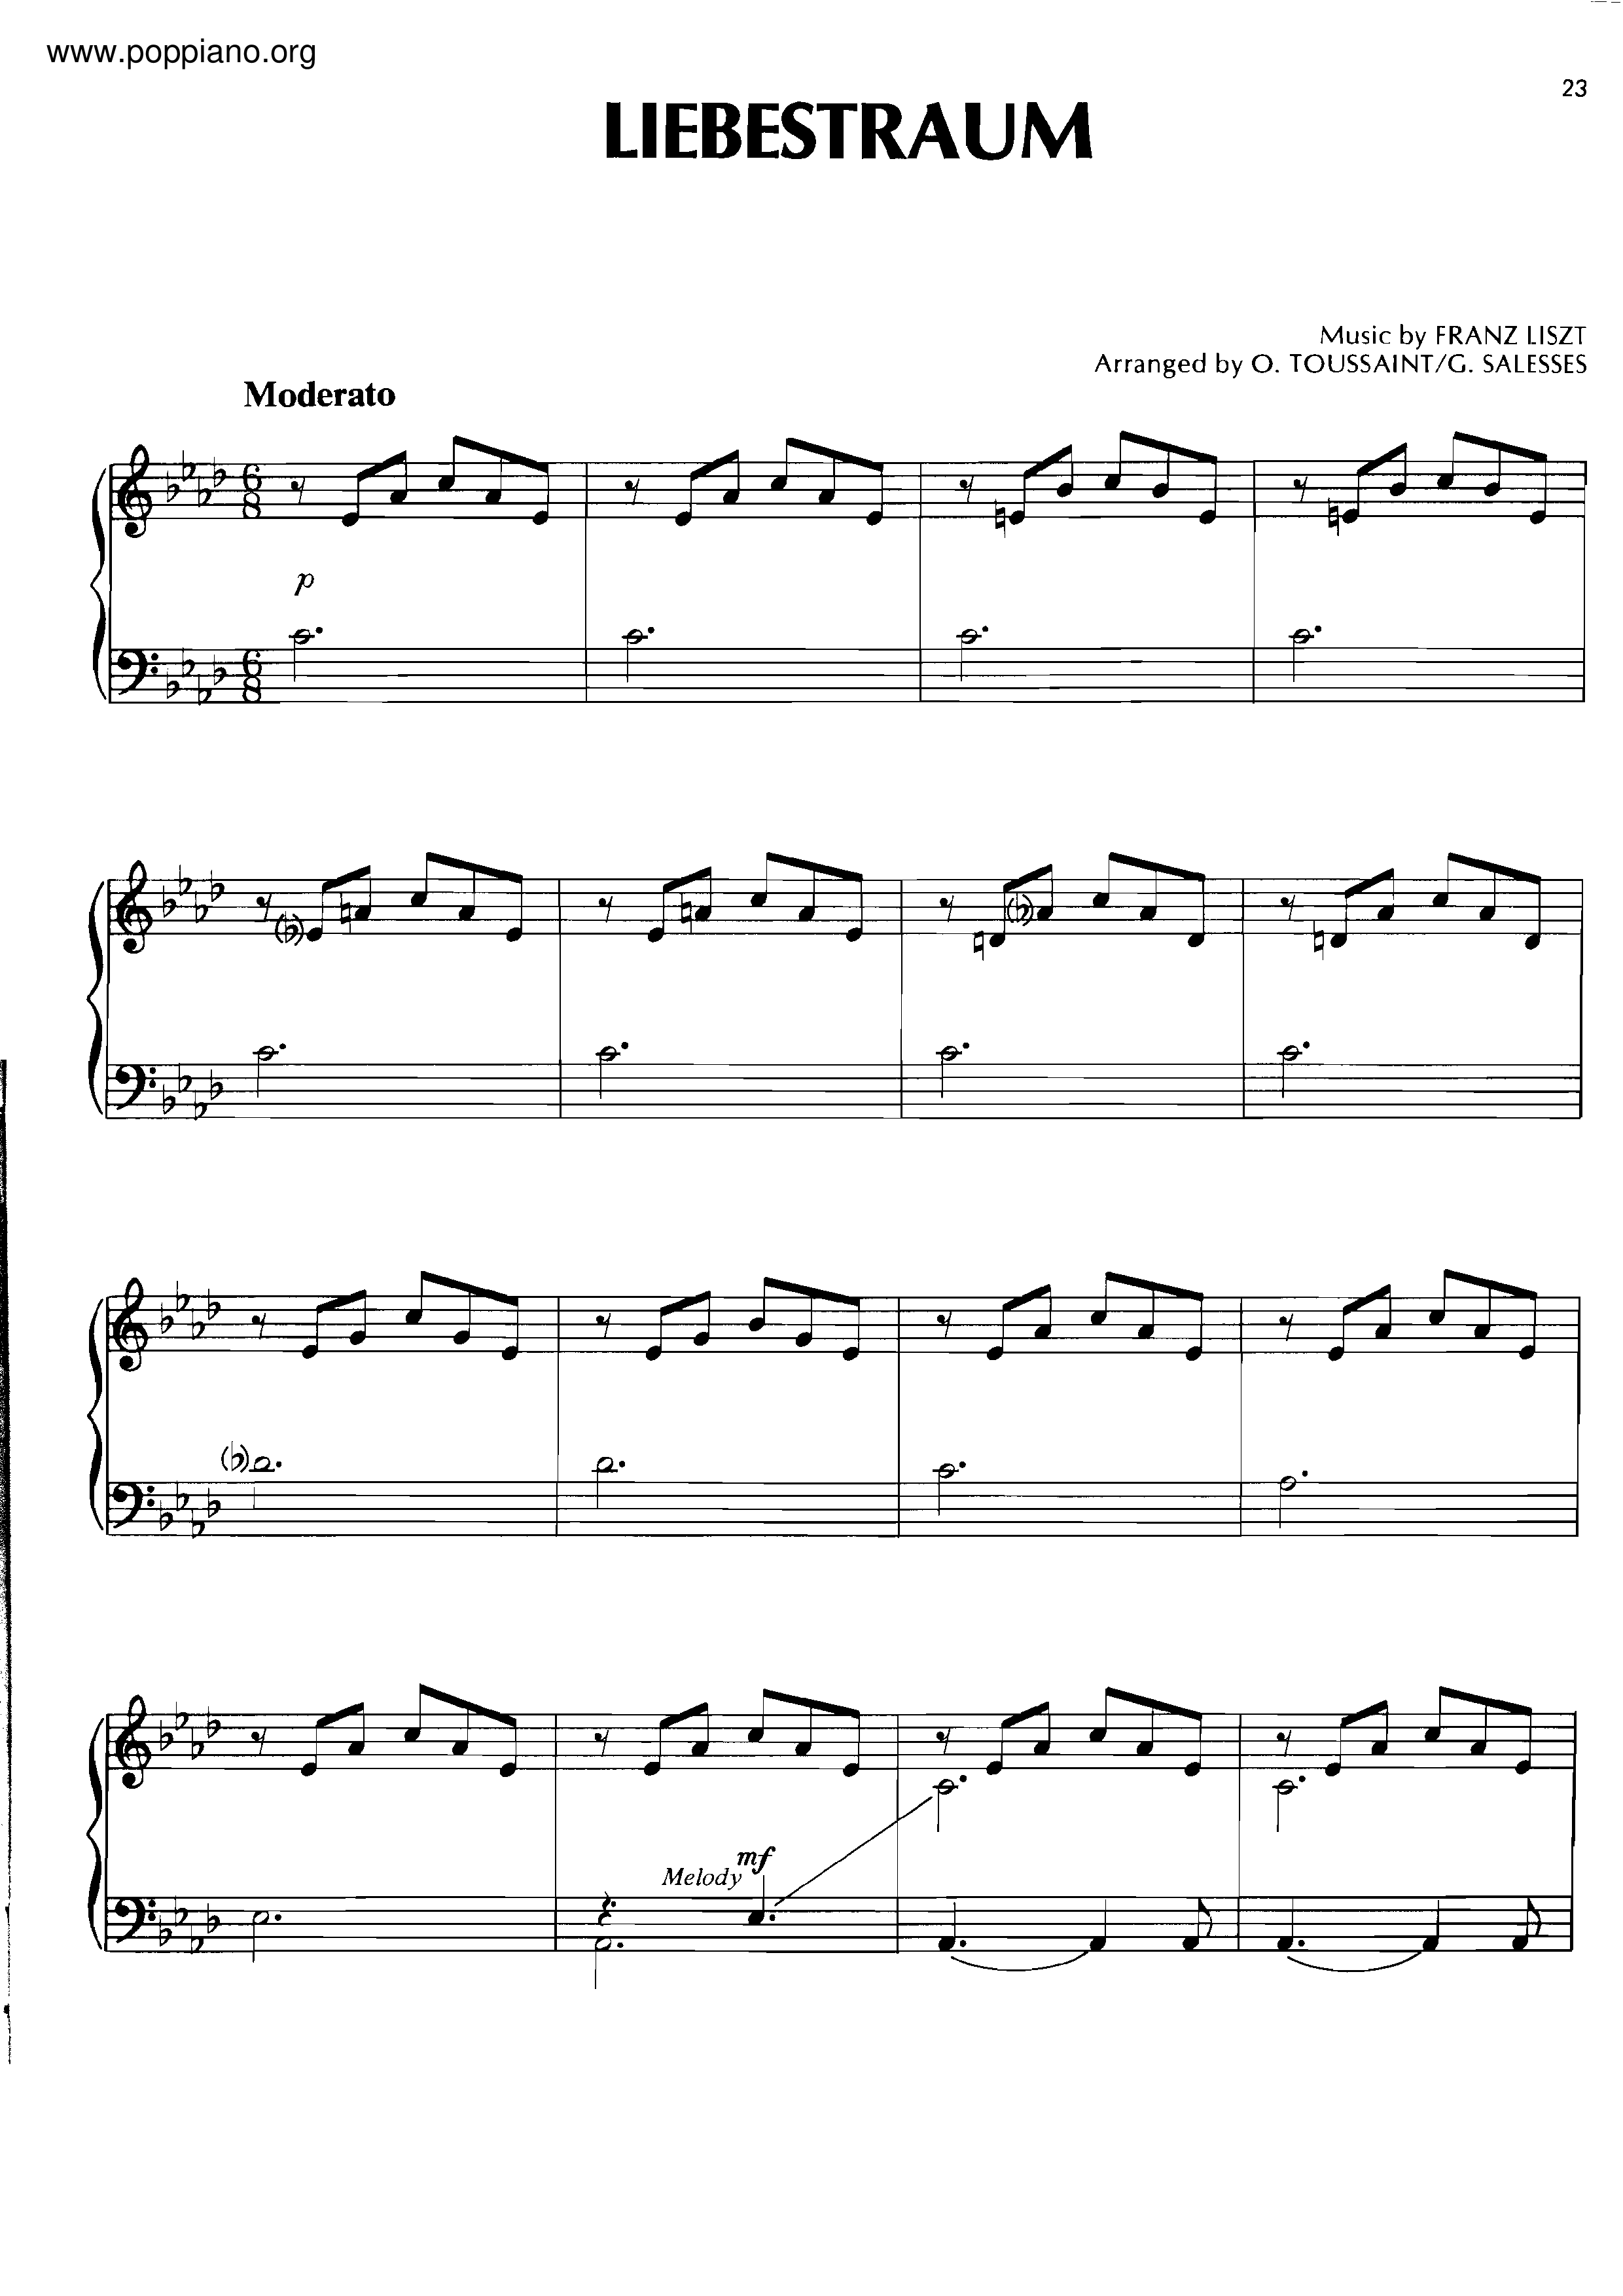 Liebestraum No. 3 in A-Flat Major, S. 541 / 3ピアノ譜